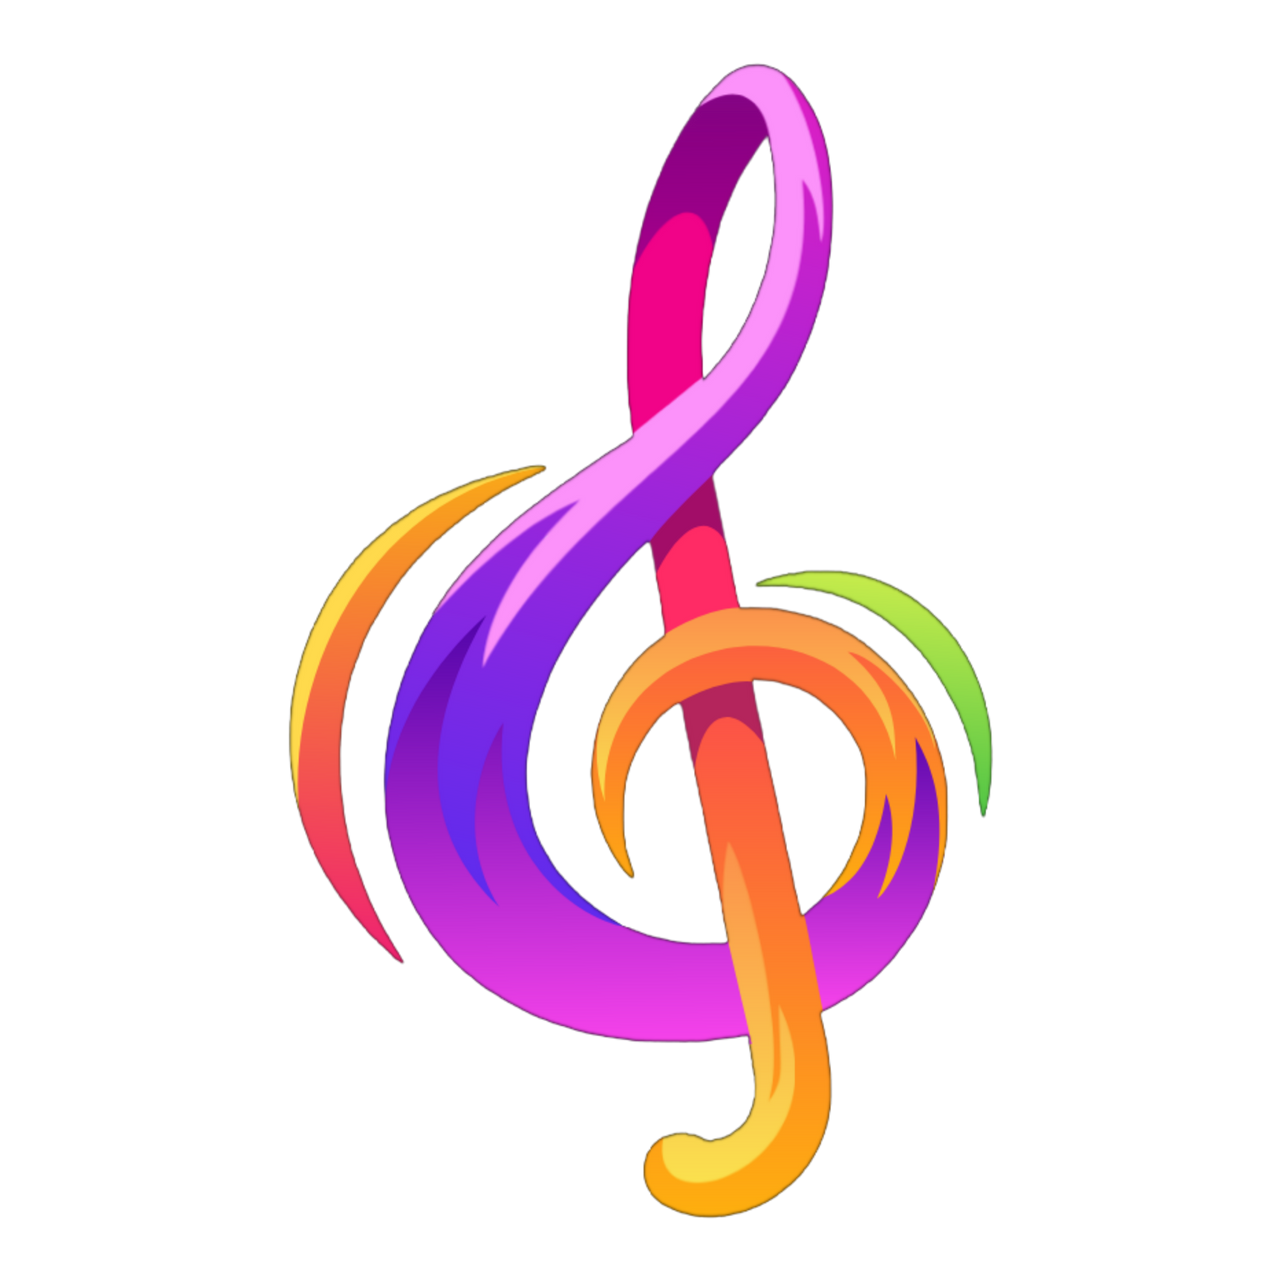 music_band_logo_design__song_logo_design_png__by_rahatislam11_df5ivtx-fullview